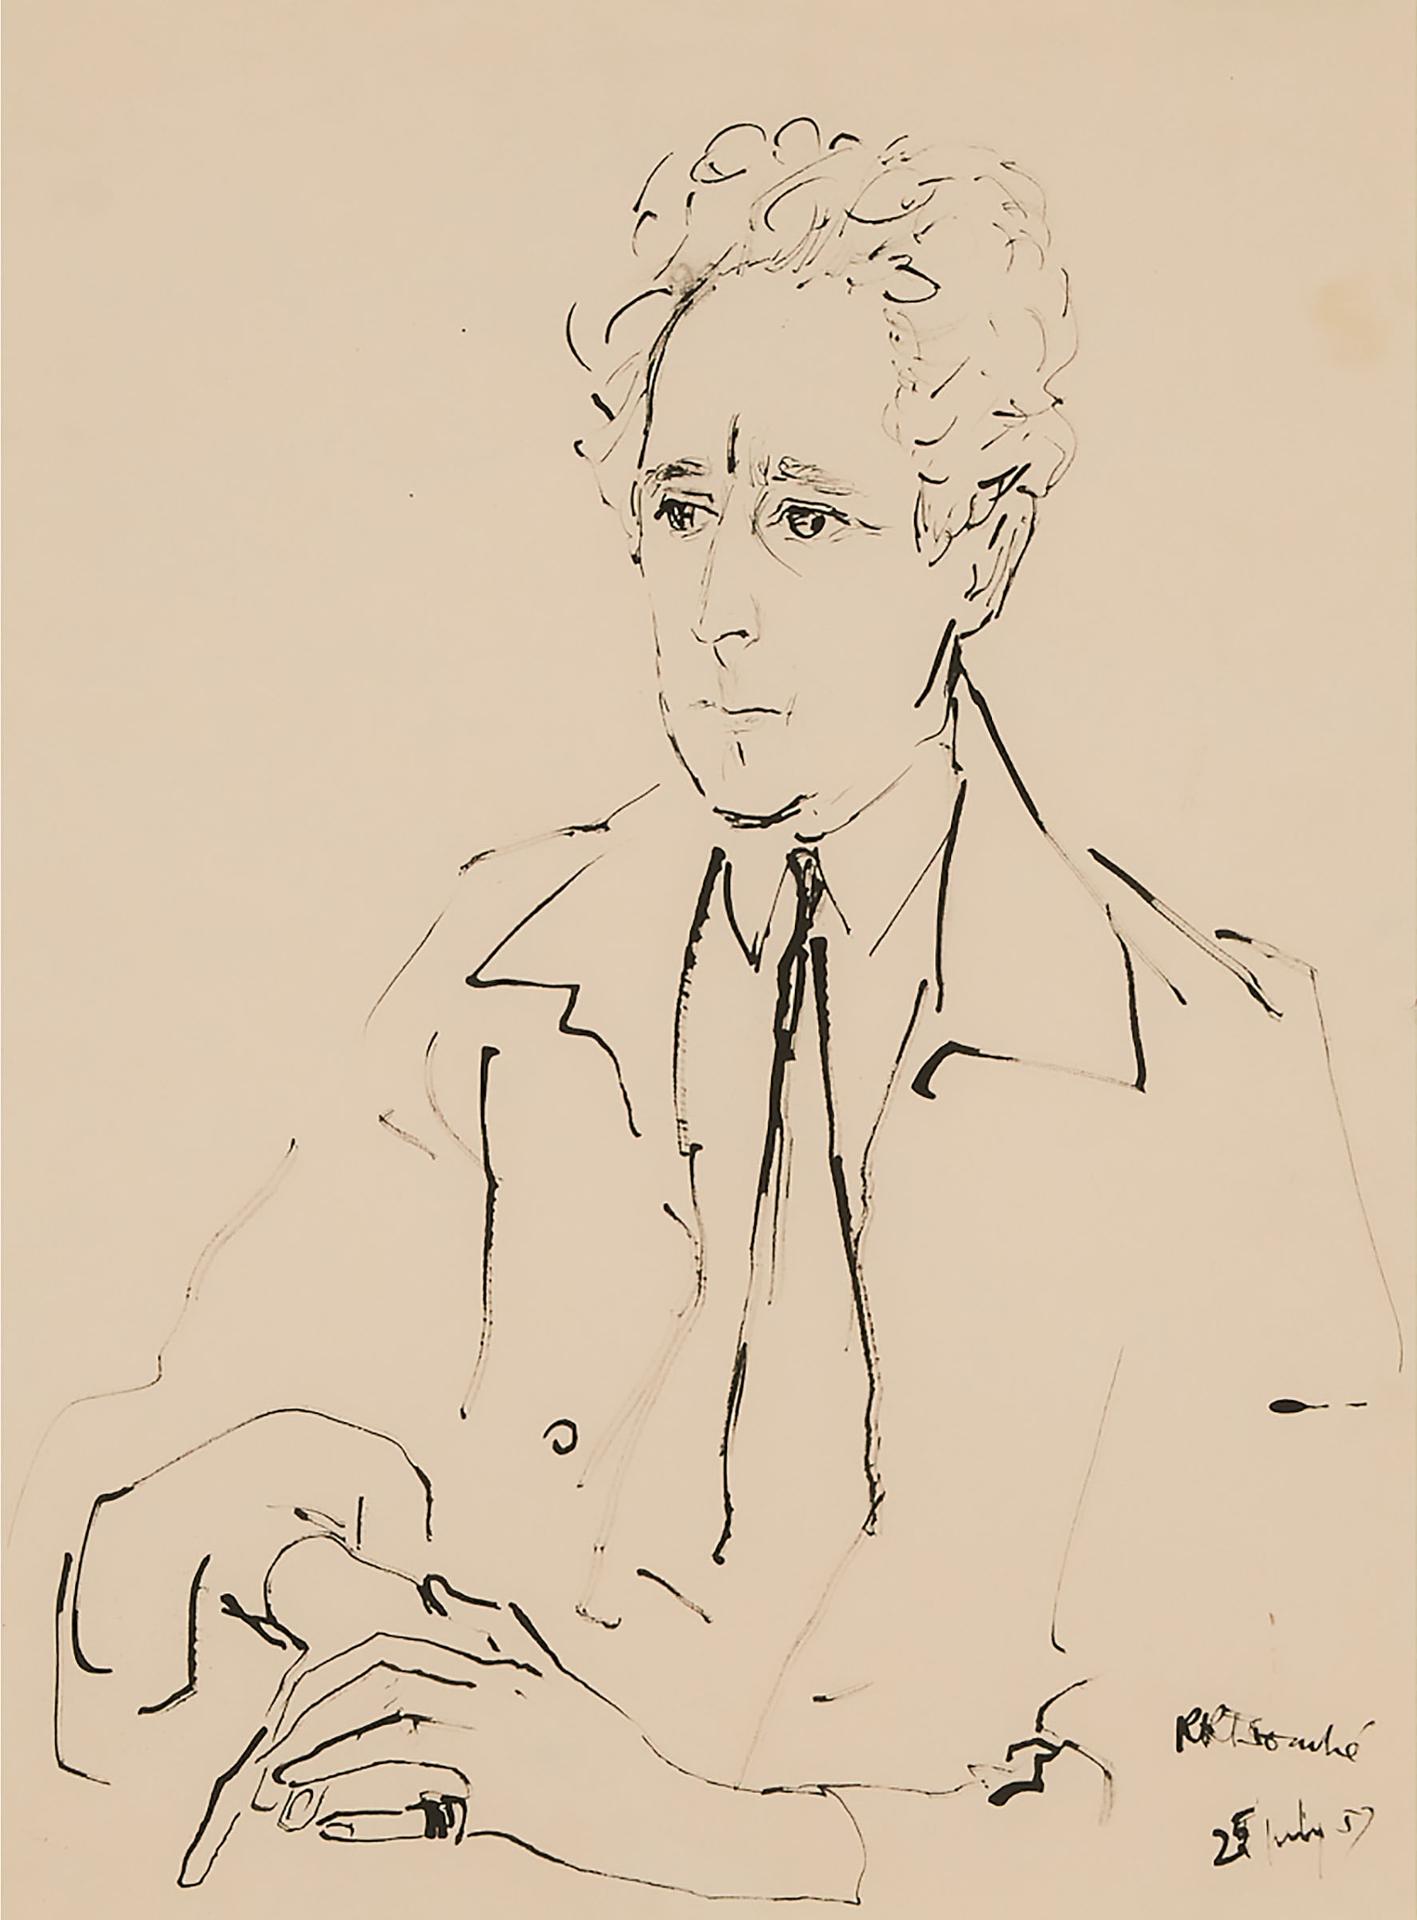 René Robert Bouché - Jean Cocteau, July 25, 1957